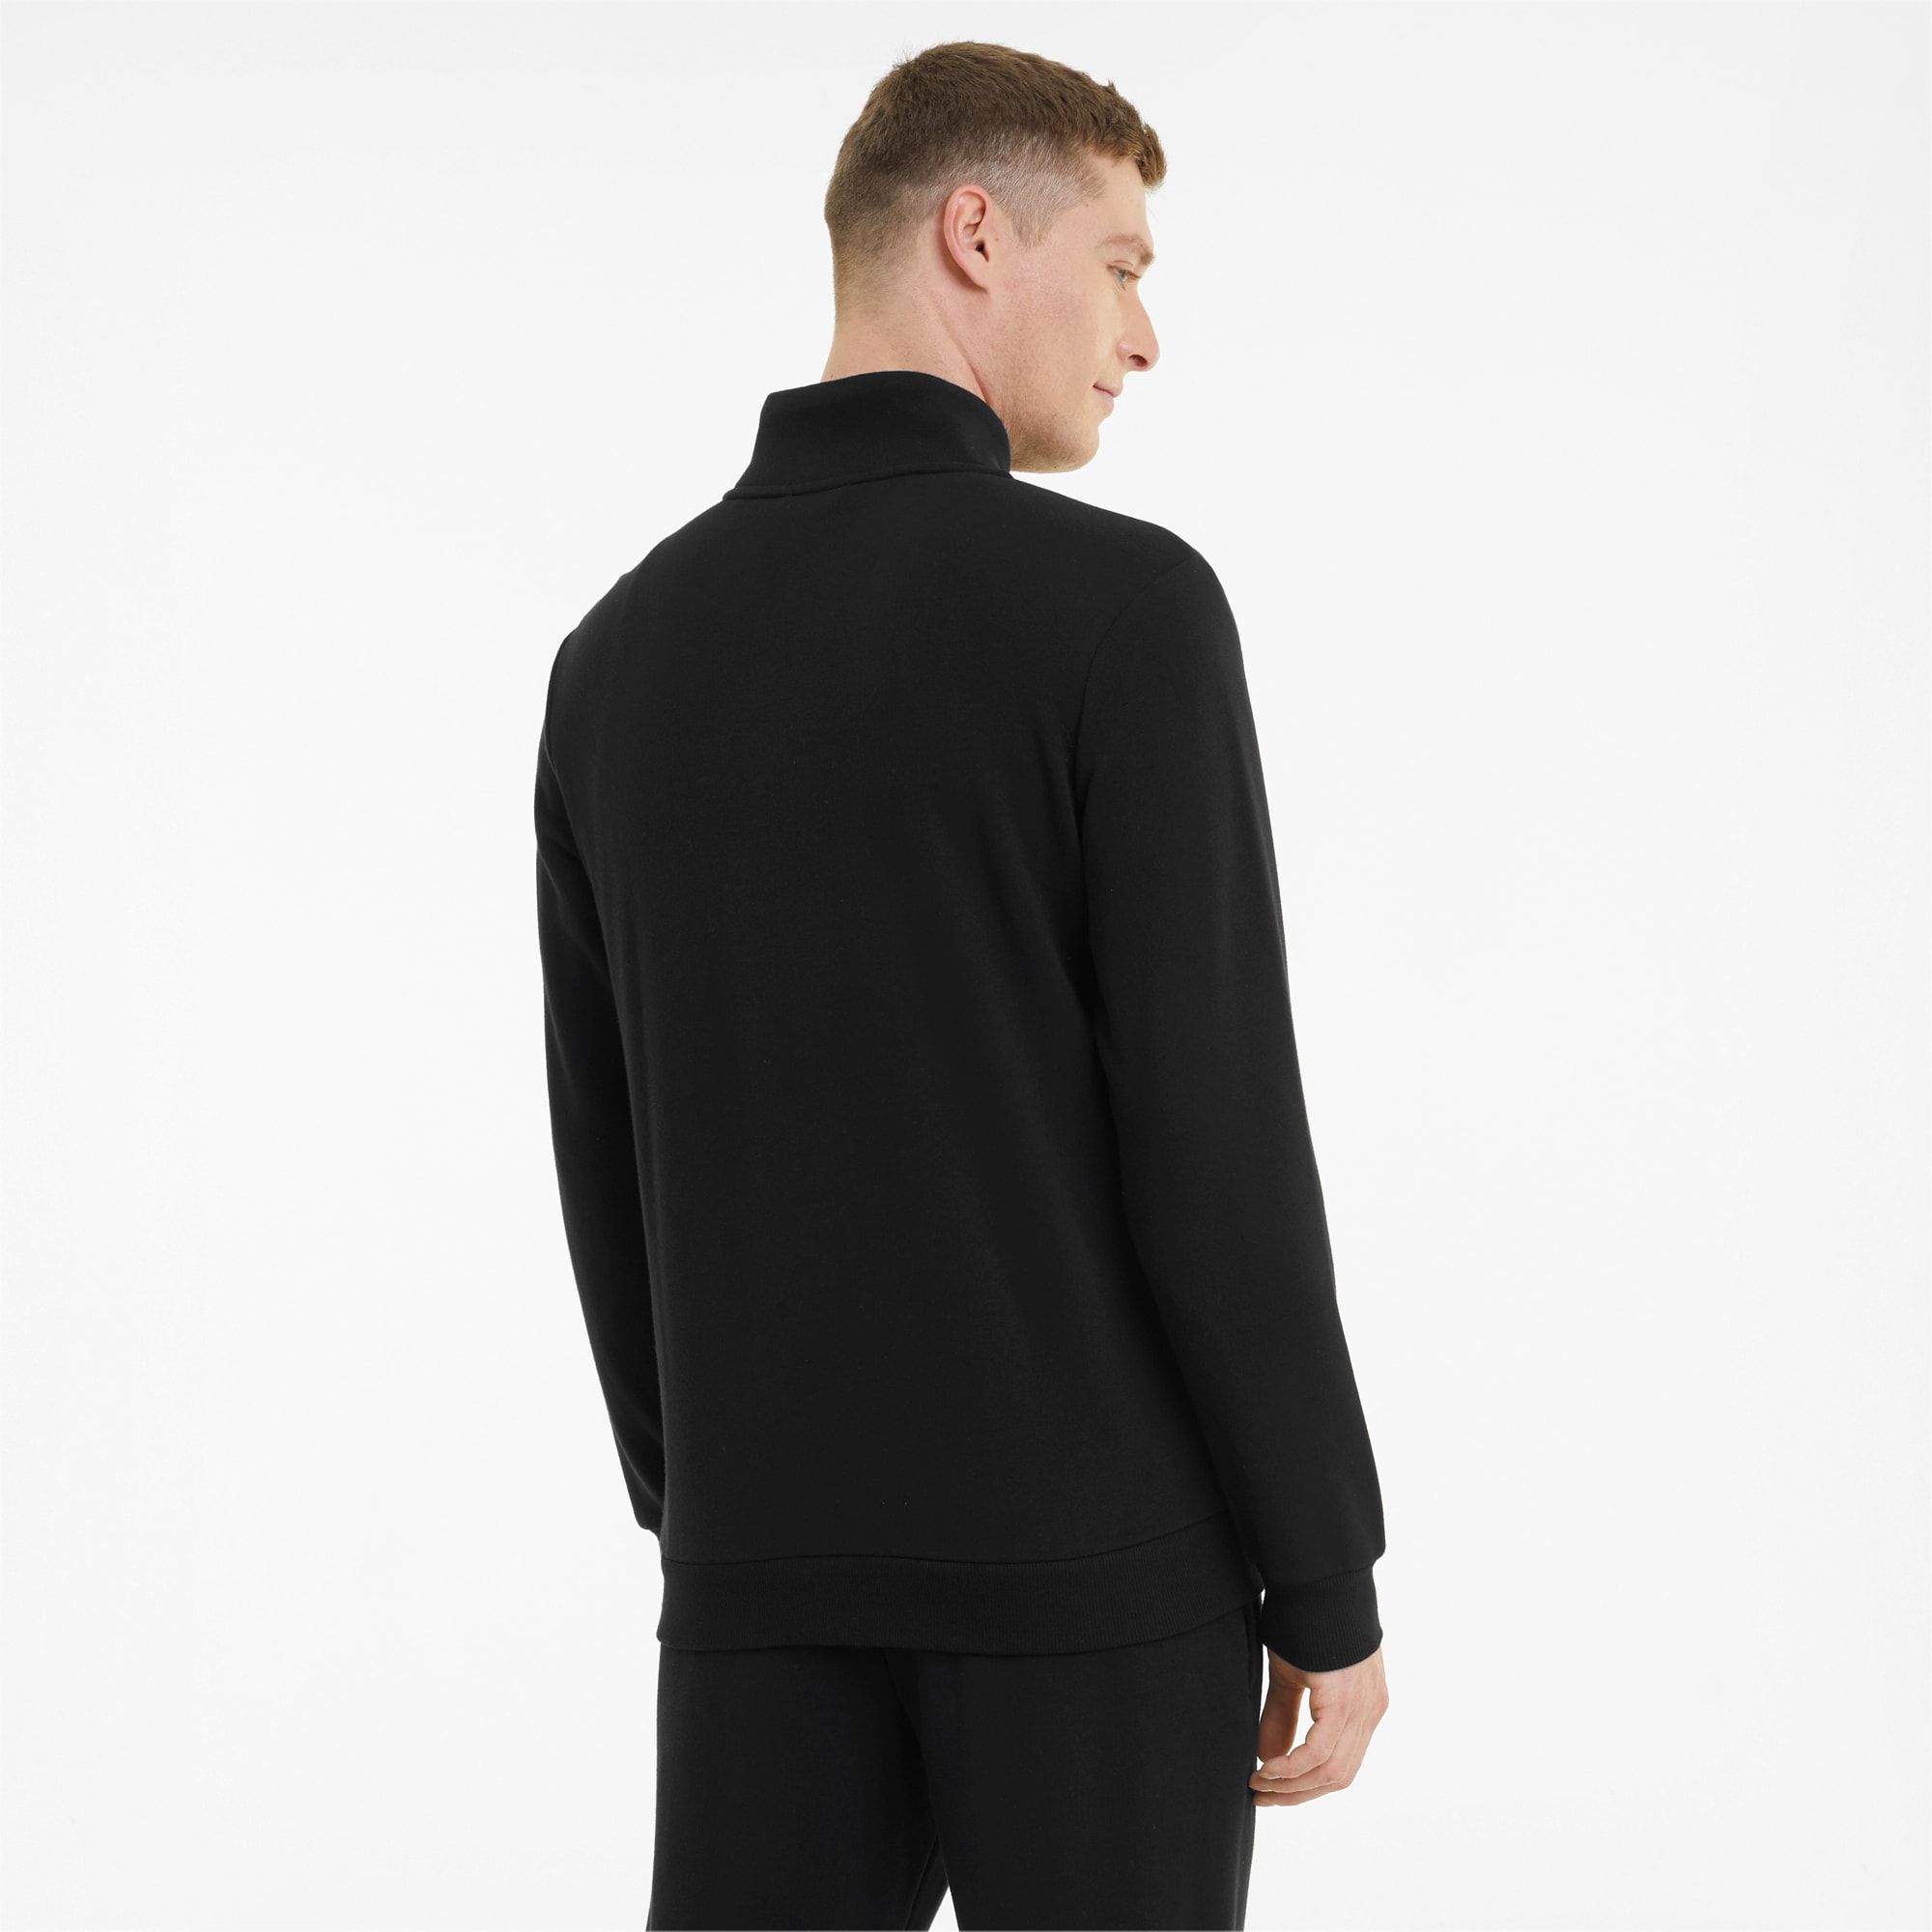 PUMA Essentials Men's Track Jacket, Black, Size M, Clothing